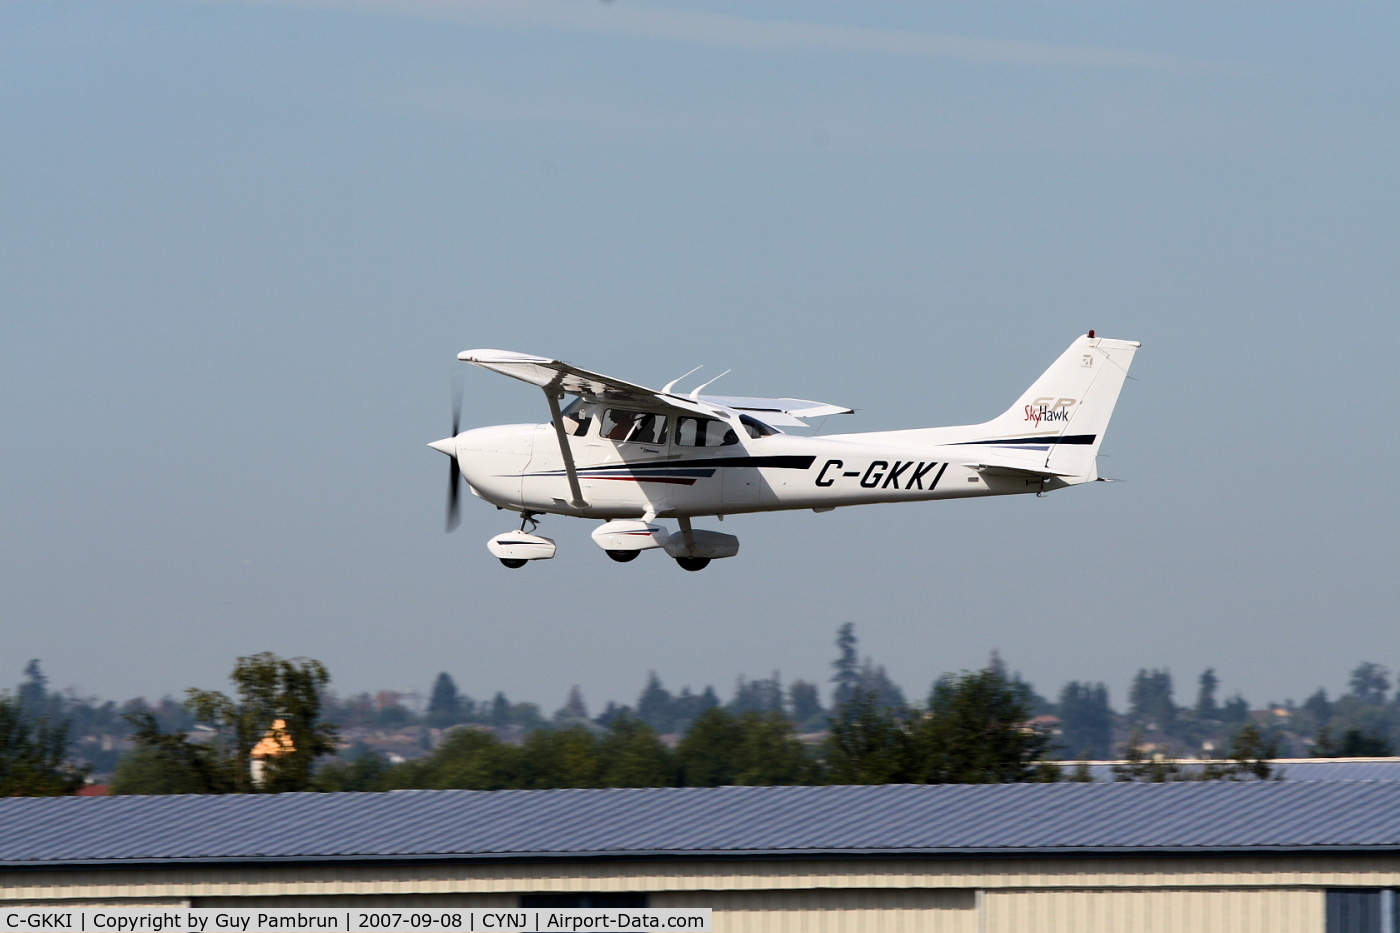 C-GKKI, 2001 Cessna 172S C/N 172S8877, Just left the ground